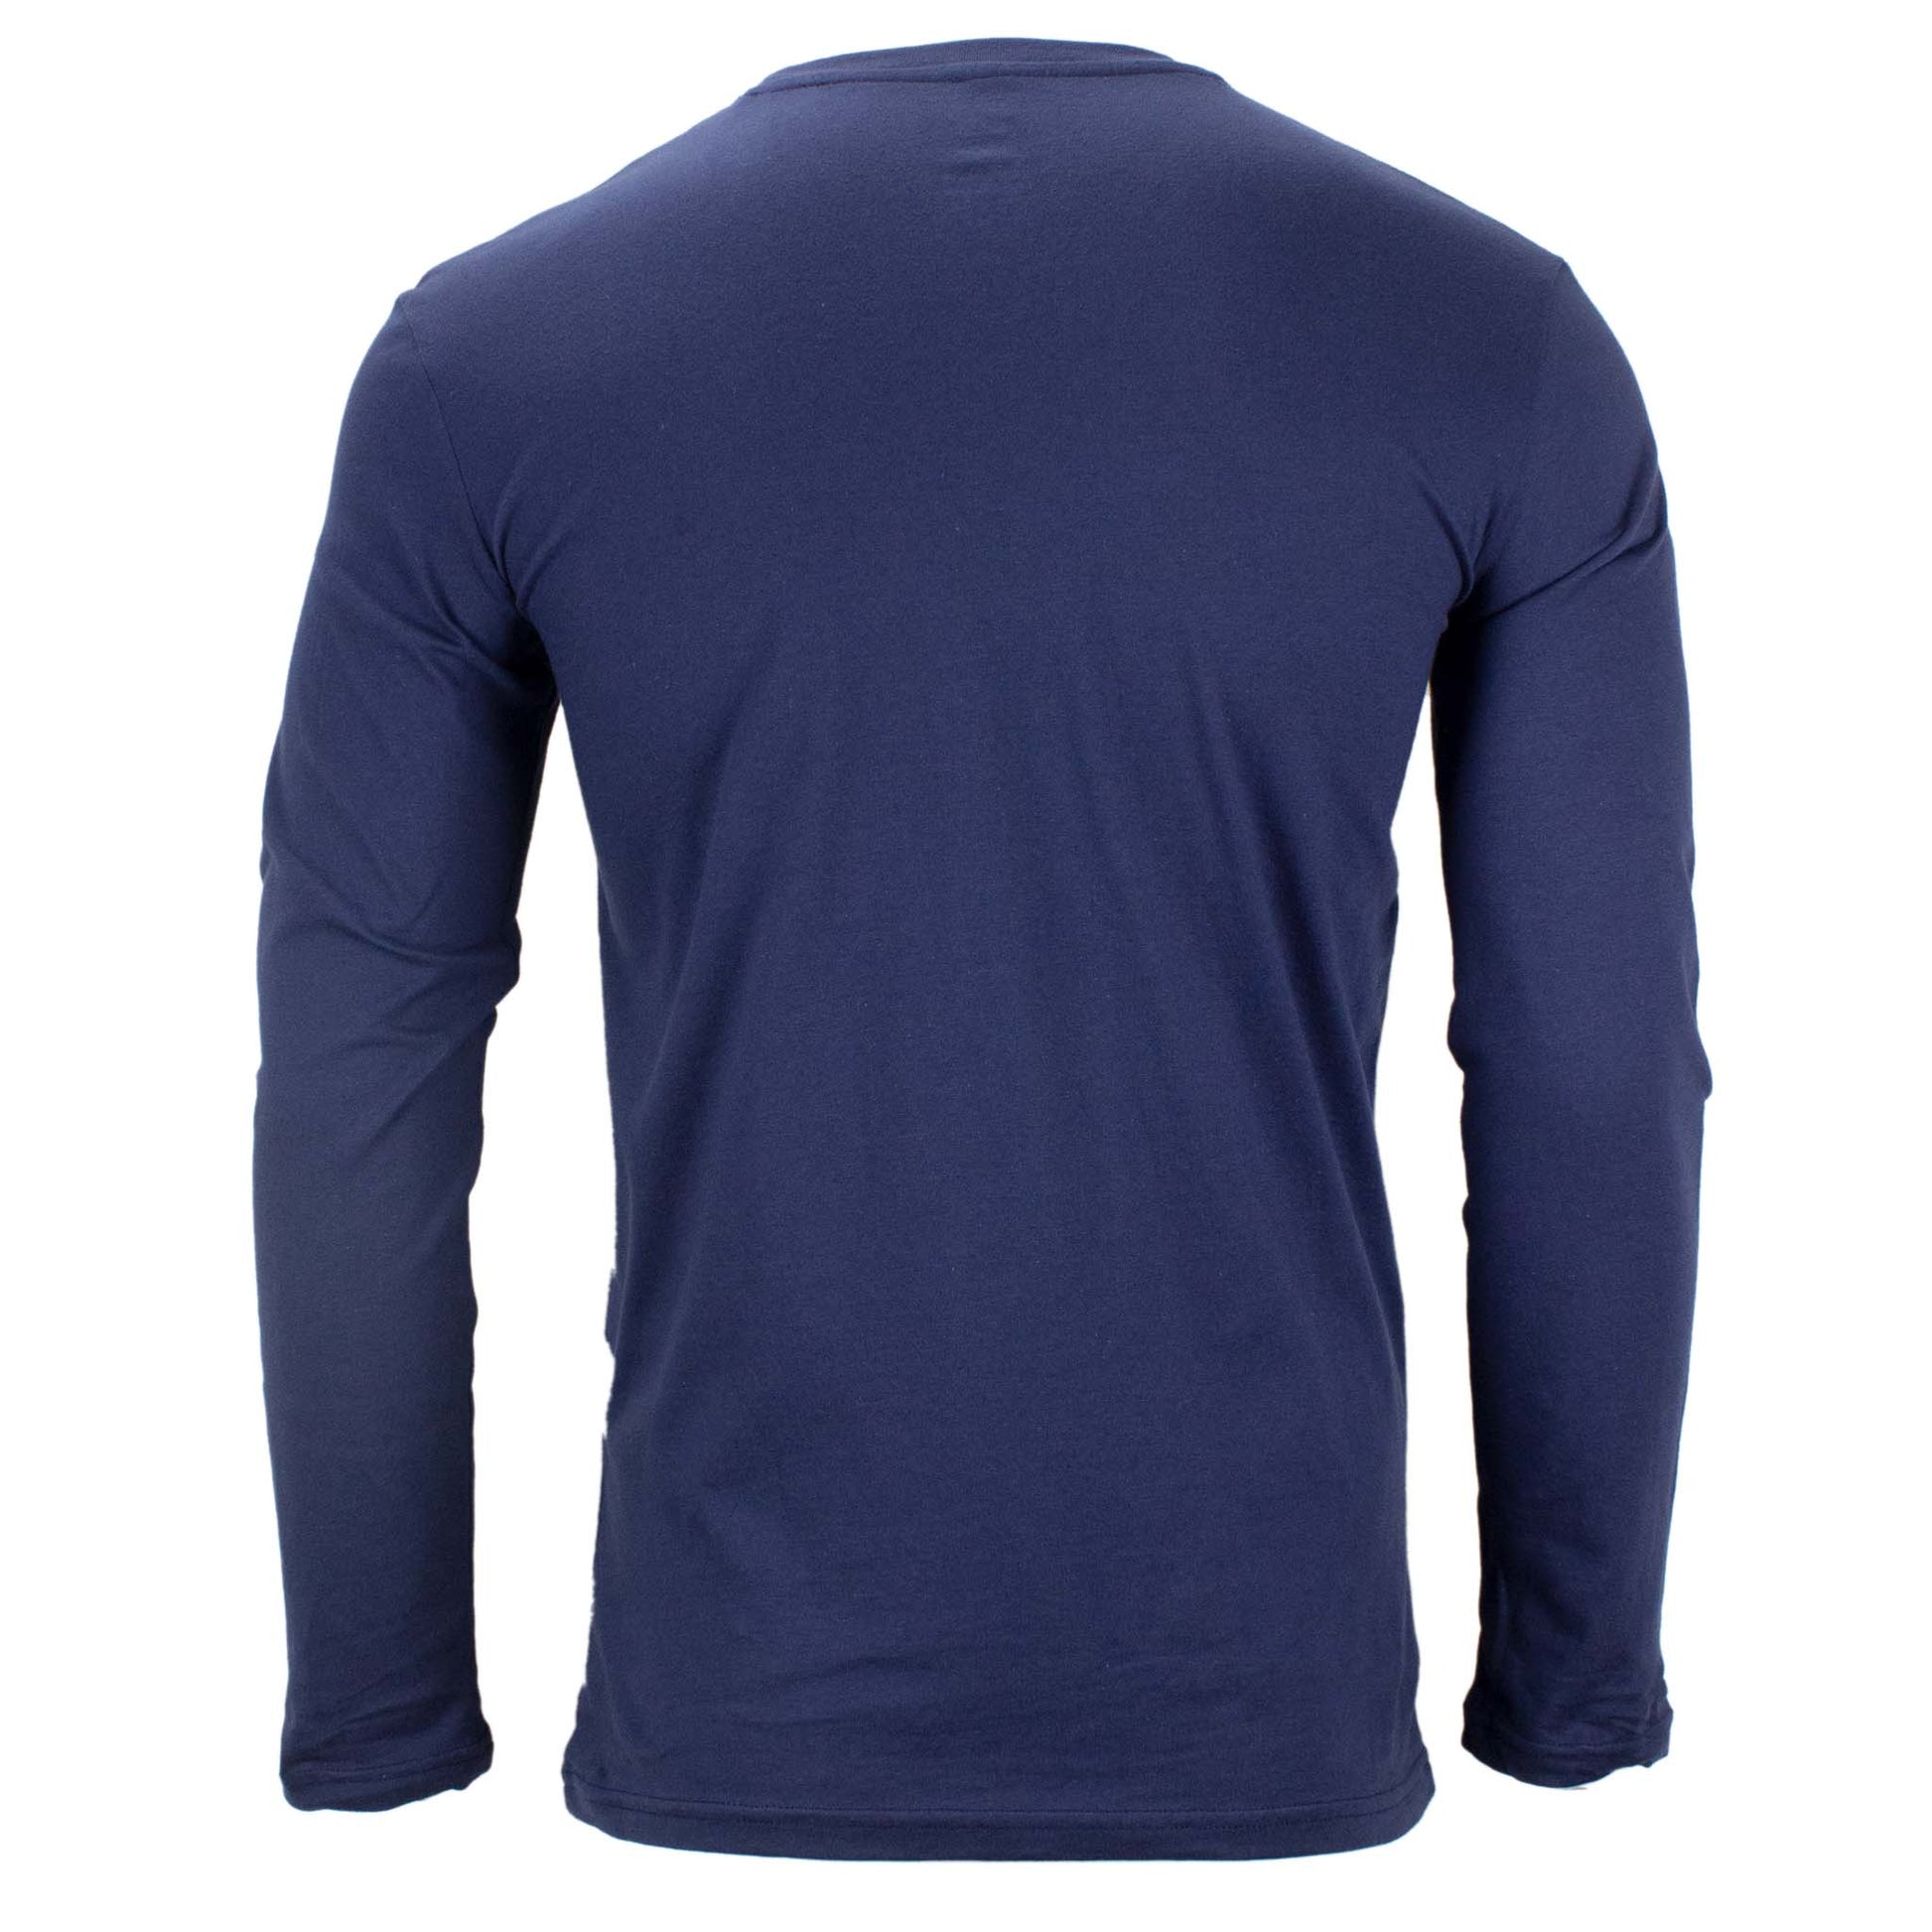 Fanatics NFL New England Patriots Herren langarm T-Shirt blau 1568MNVY1ADNEP-2